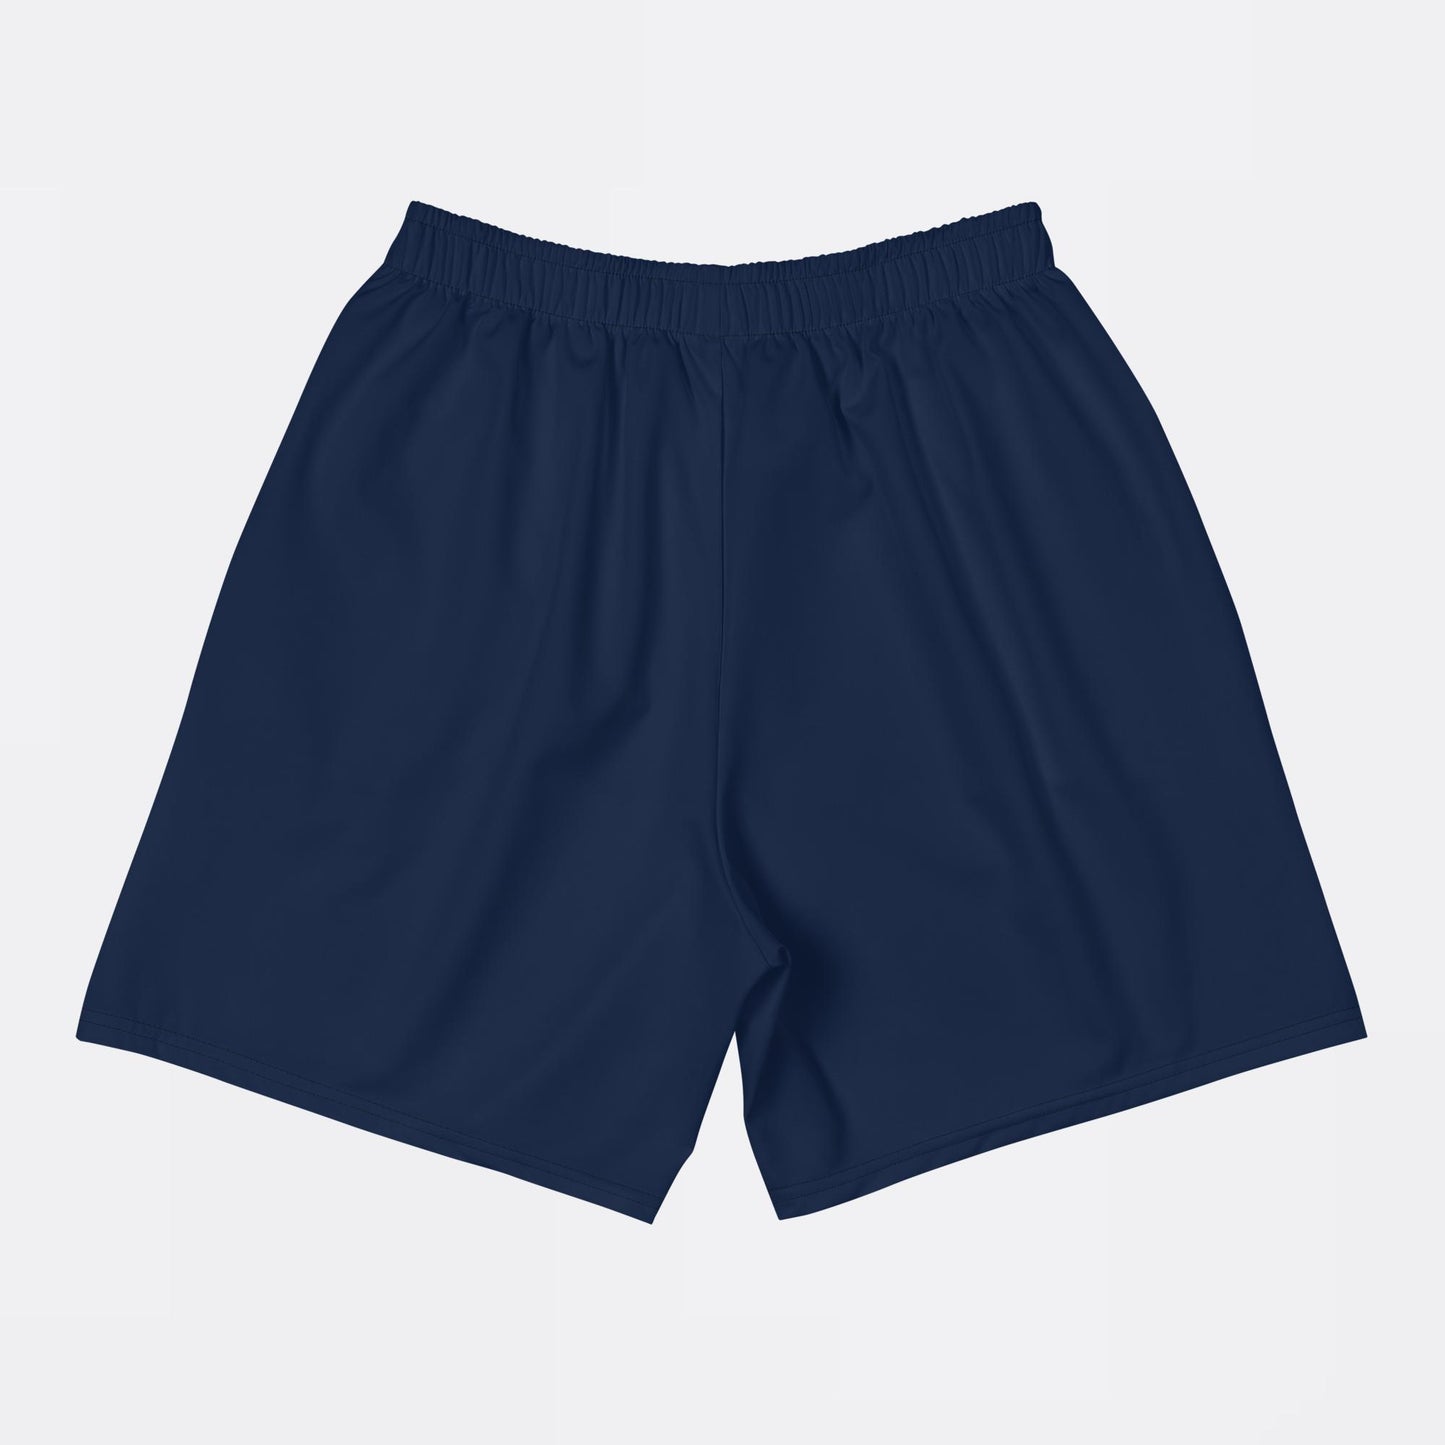 Men's Athletic Shorts Dark Blue